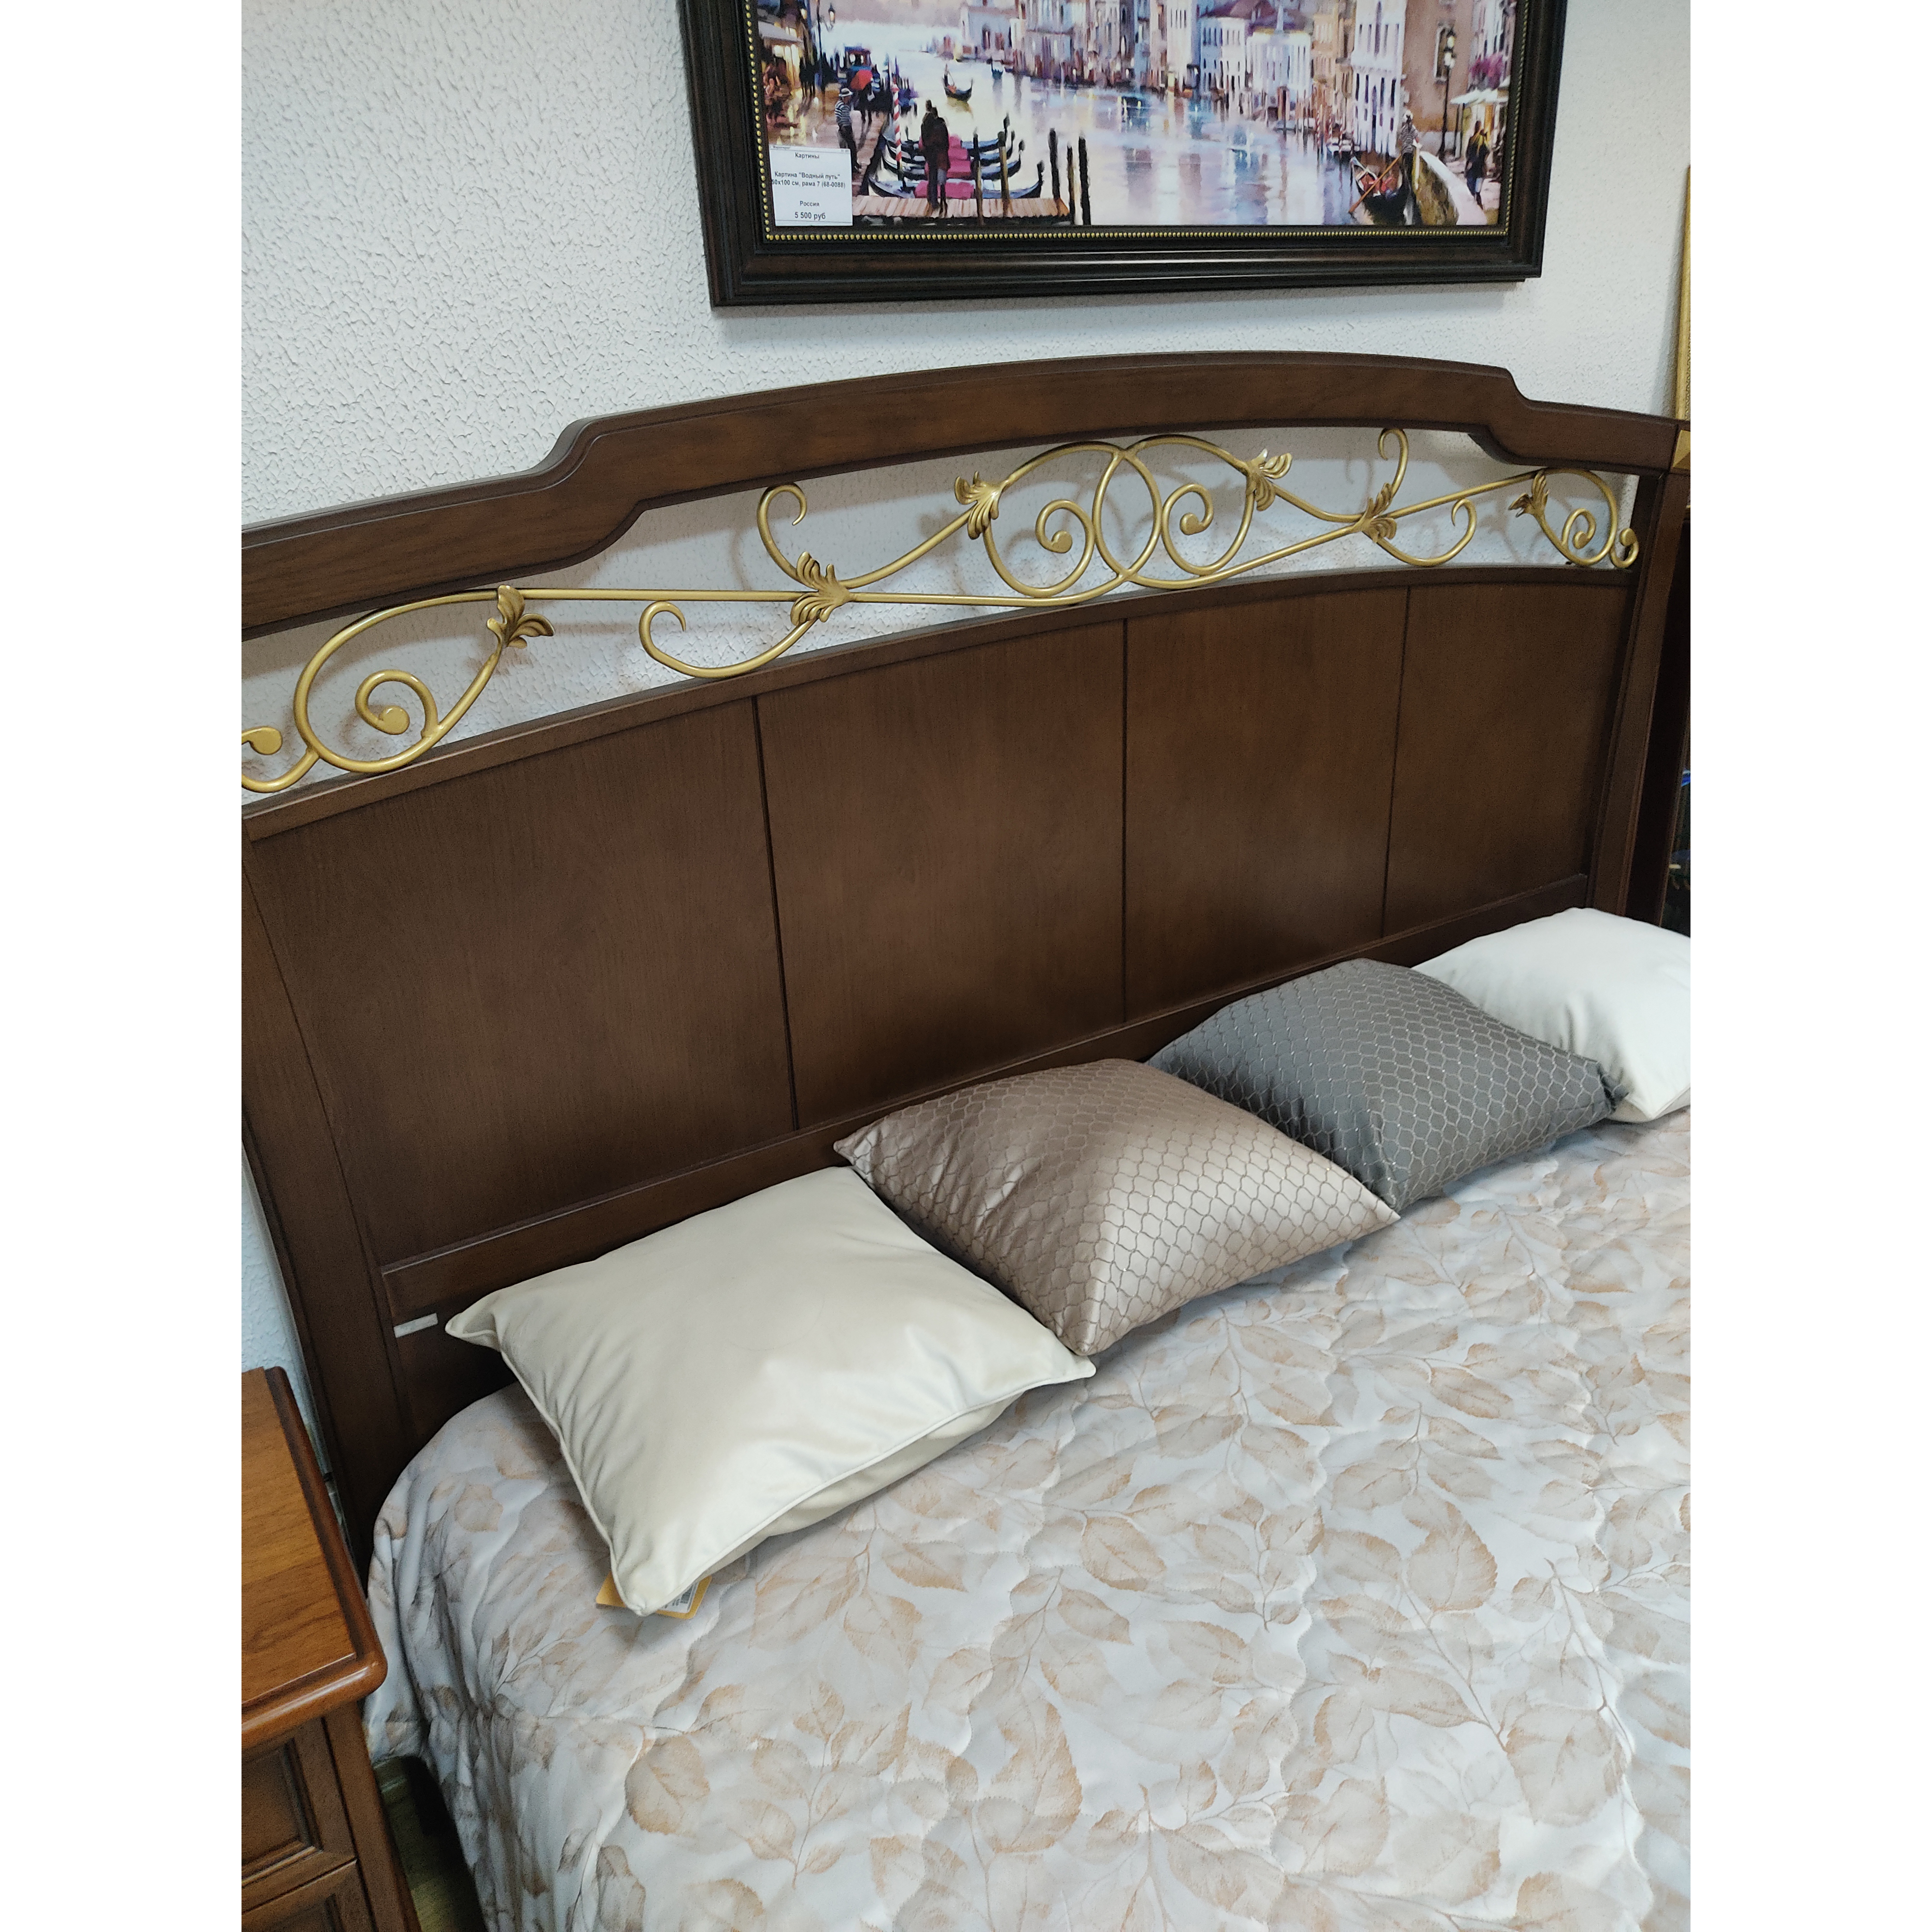 Кровать Pasion Titanic двуспальная 180x200 см, ковка, цв. roble ingles/oro (экспо)00460231+00460170